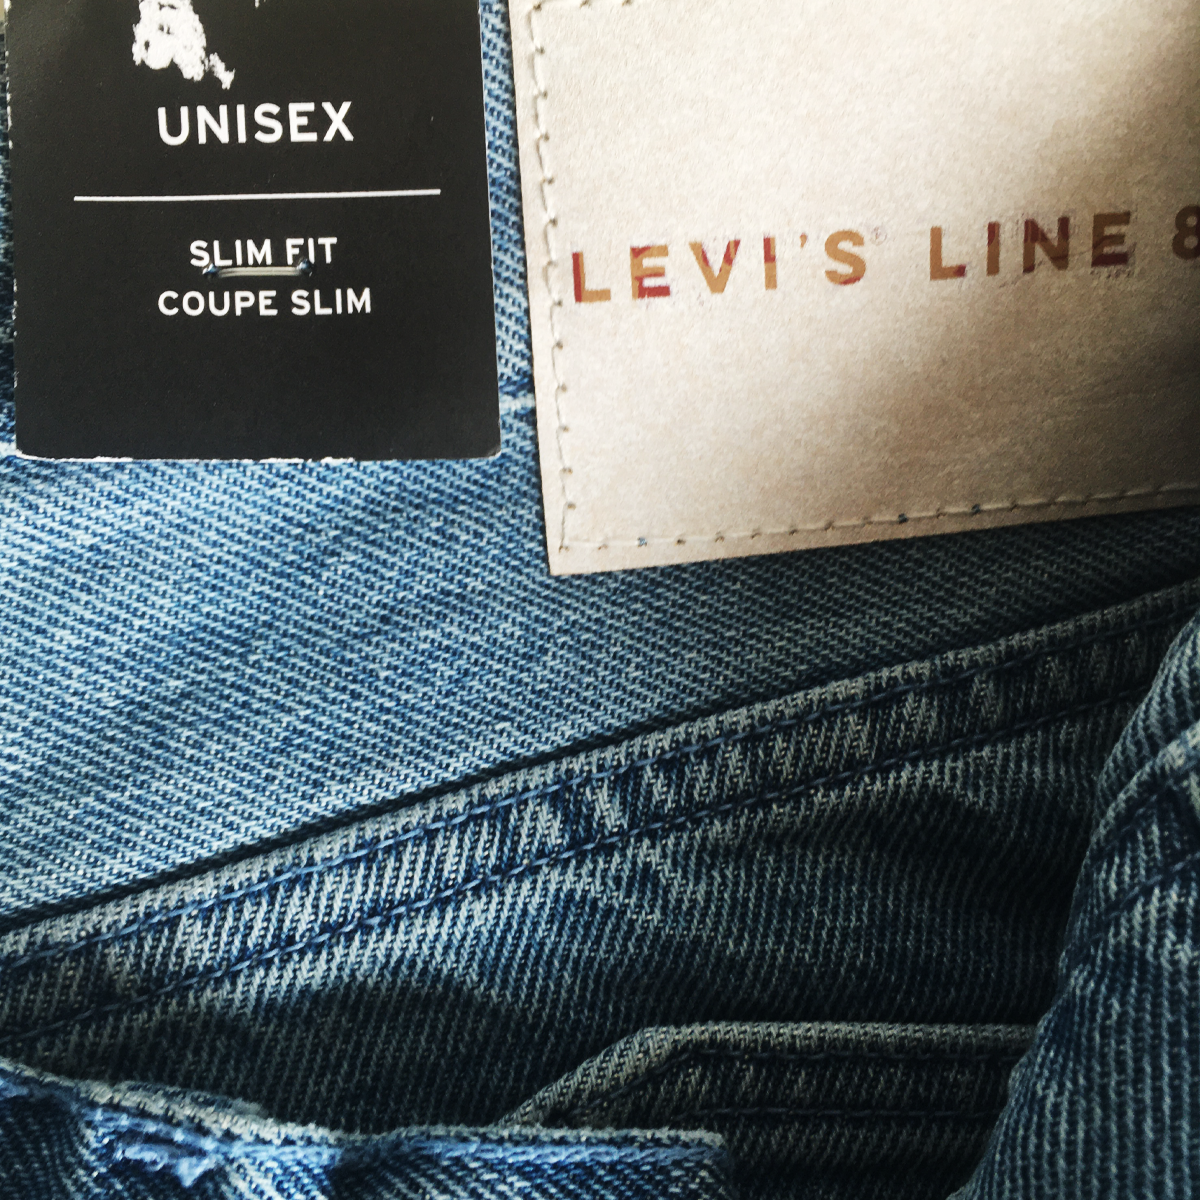 Levis Line 8 cropped blue jean 11